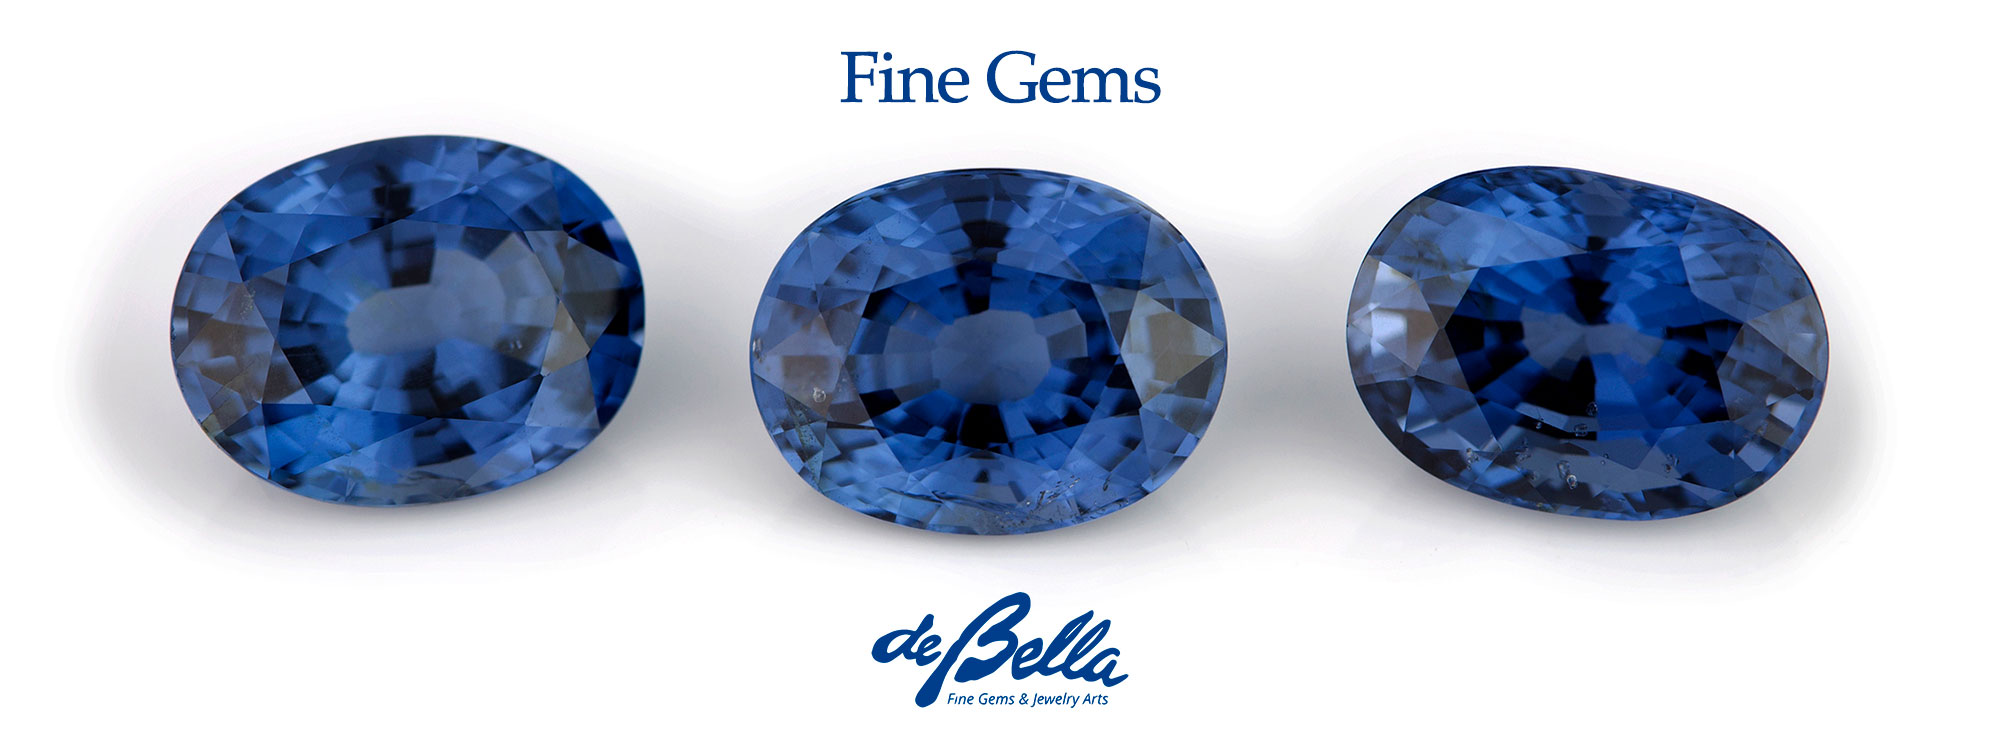 deBella Fine Gems